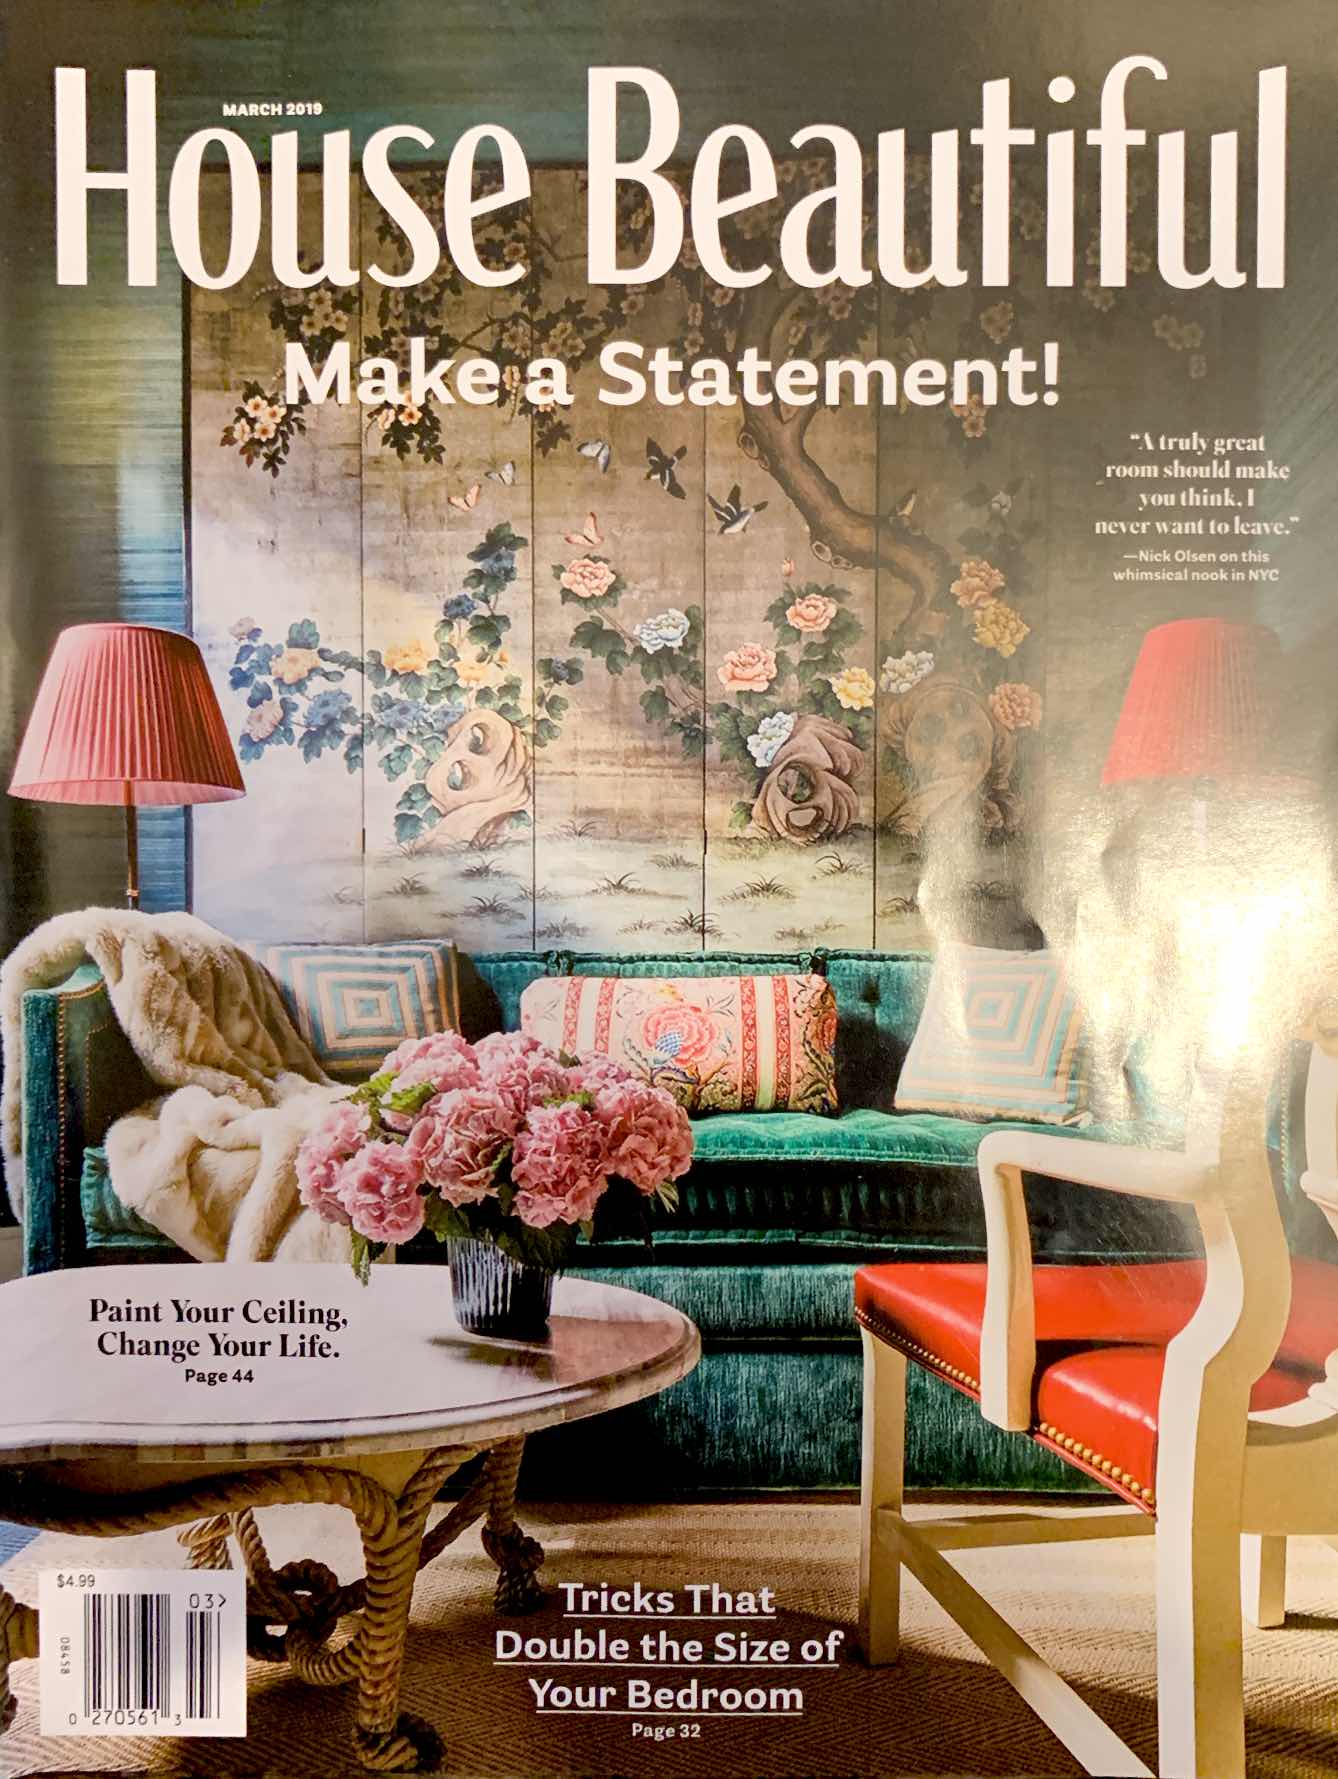 Christian Burch & John Frechette's home featured in House Beautiful March 2019